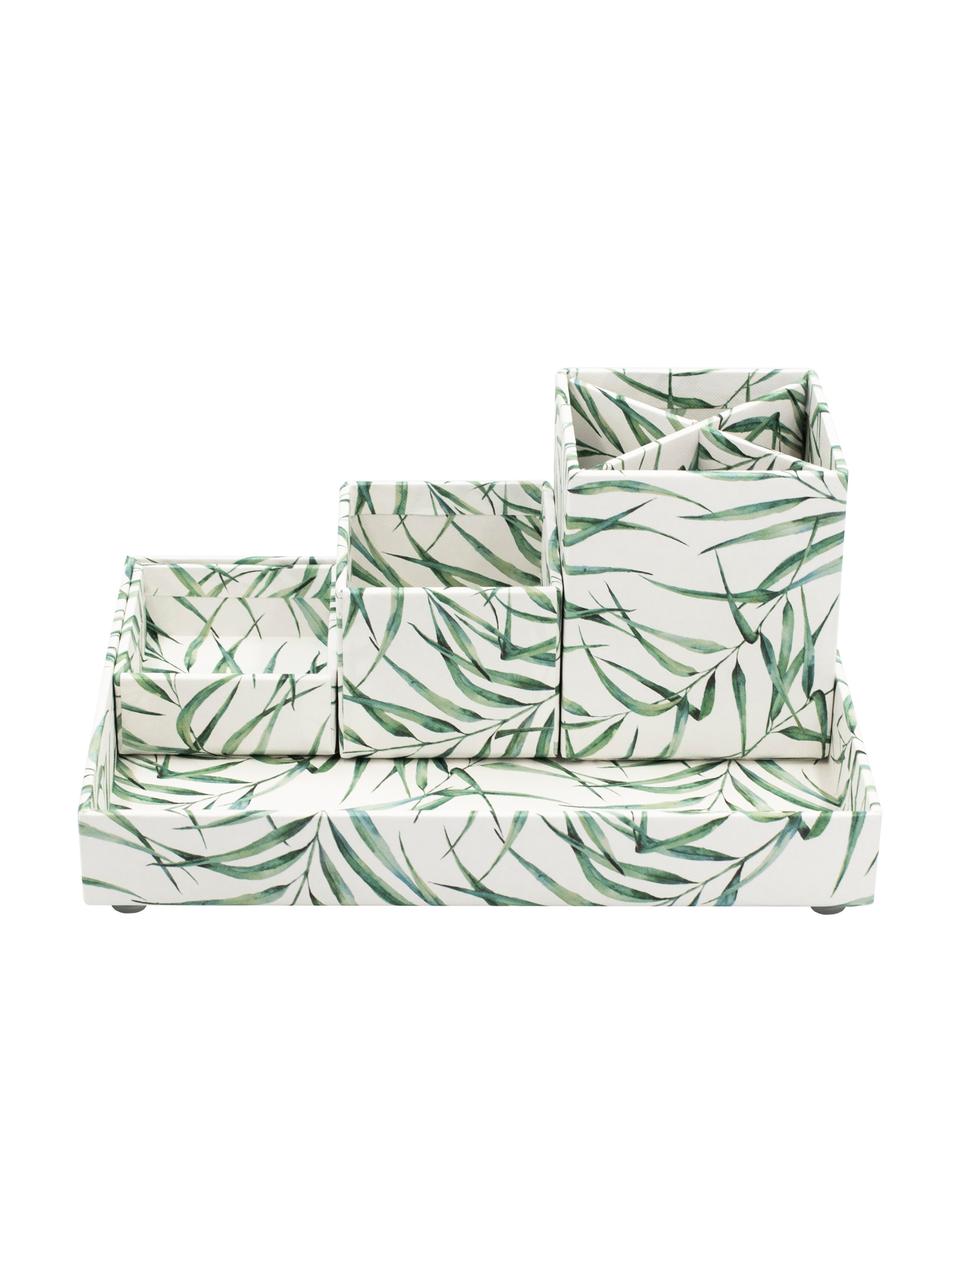 Organizador de escritorio Leaf, Cartón laminado macizo, Blanco, verde, Set de diferentes tamaños